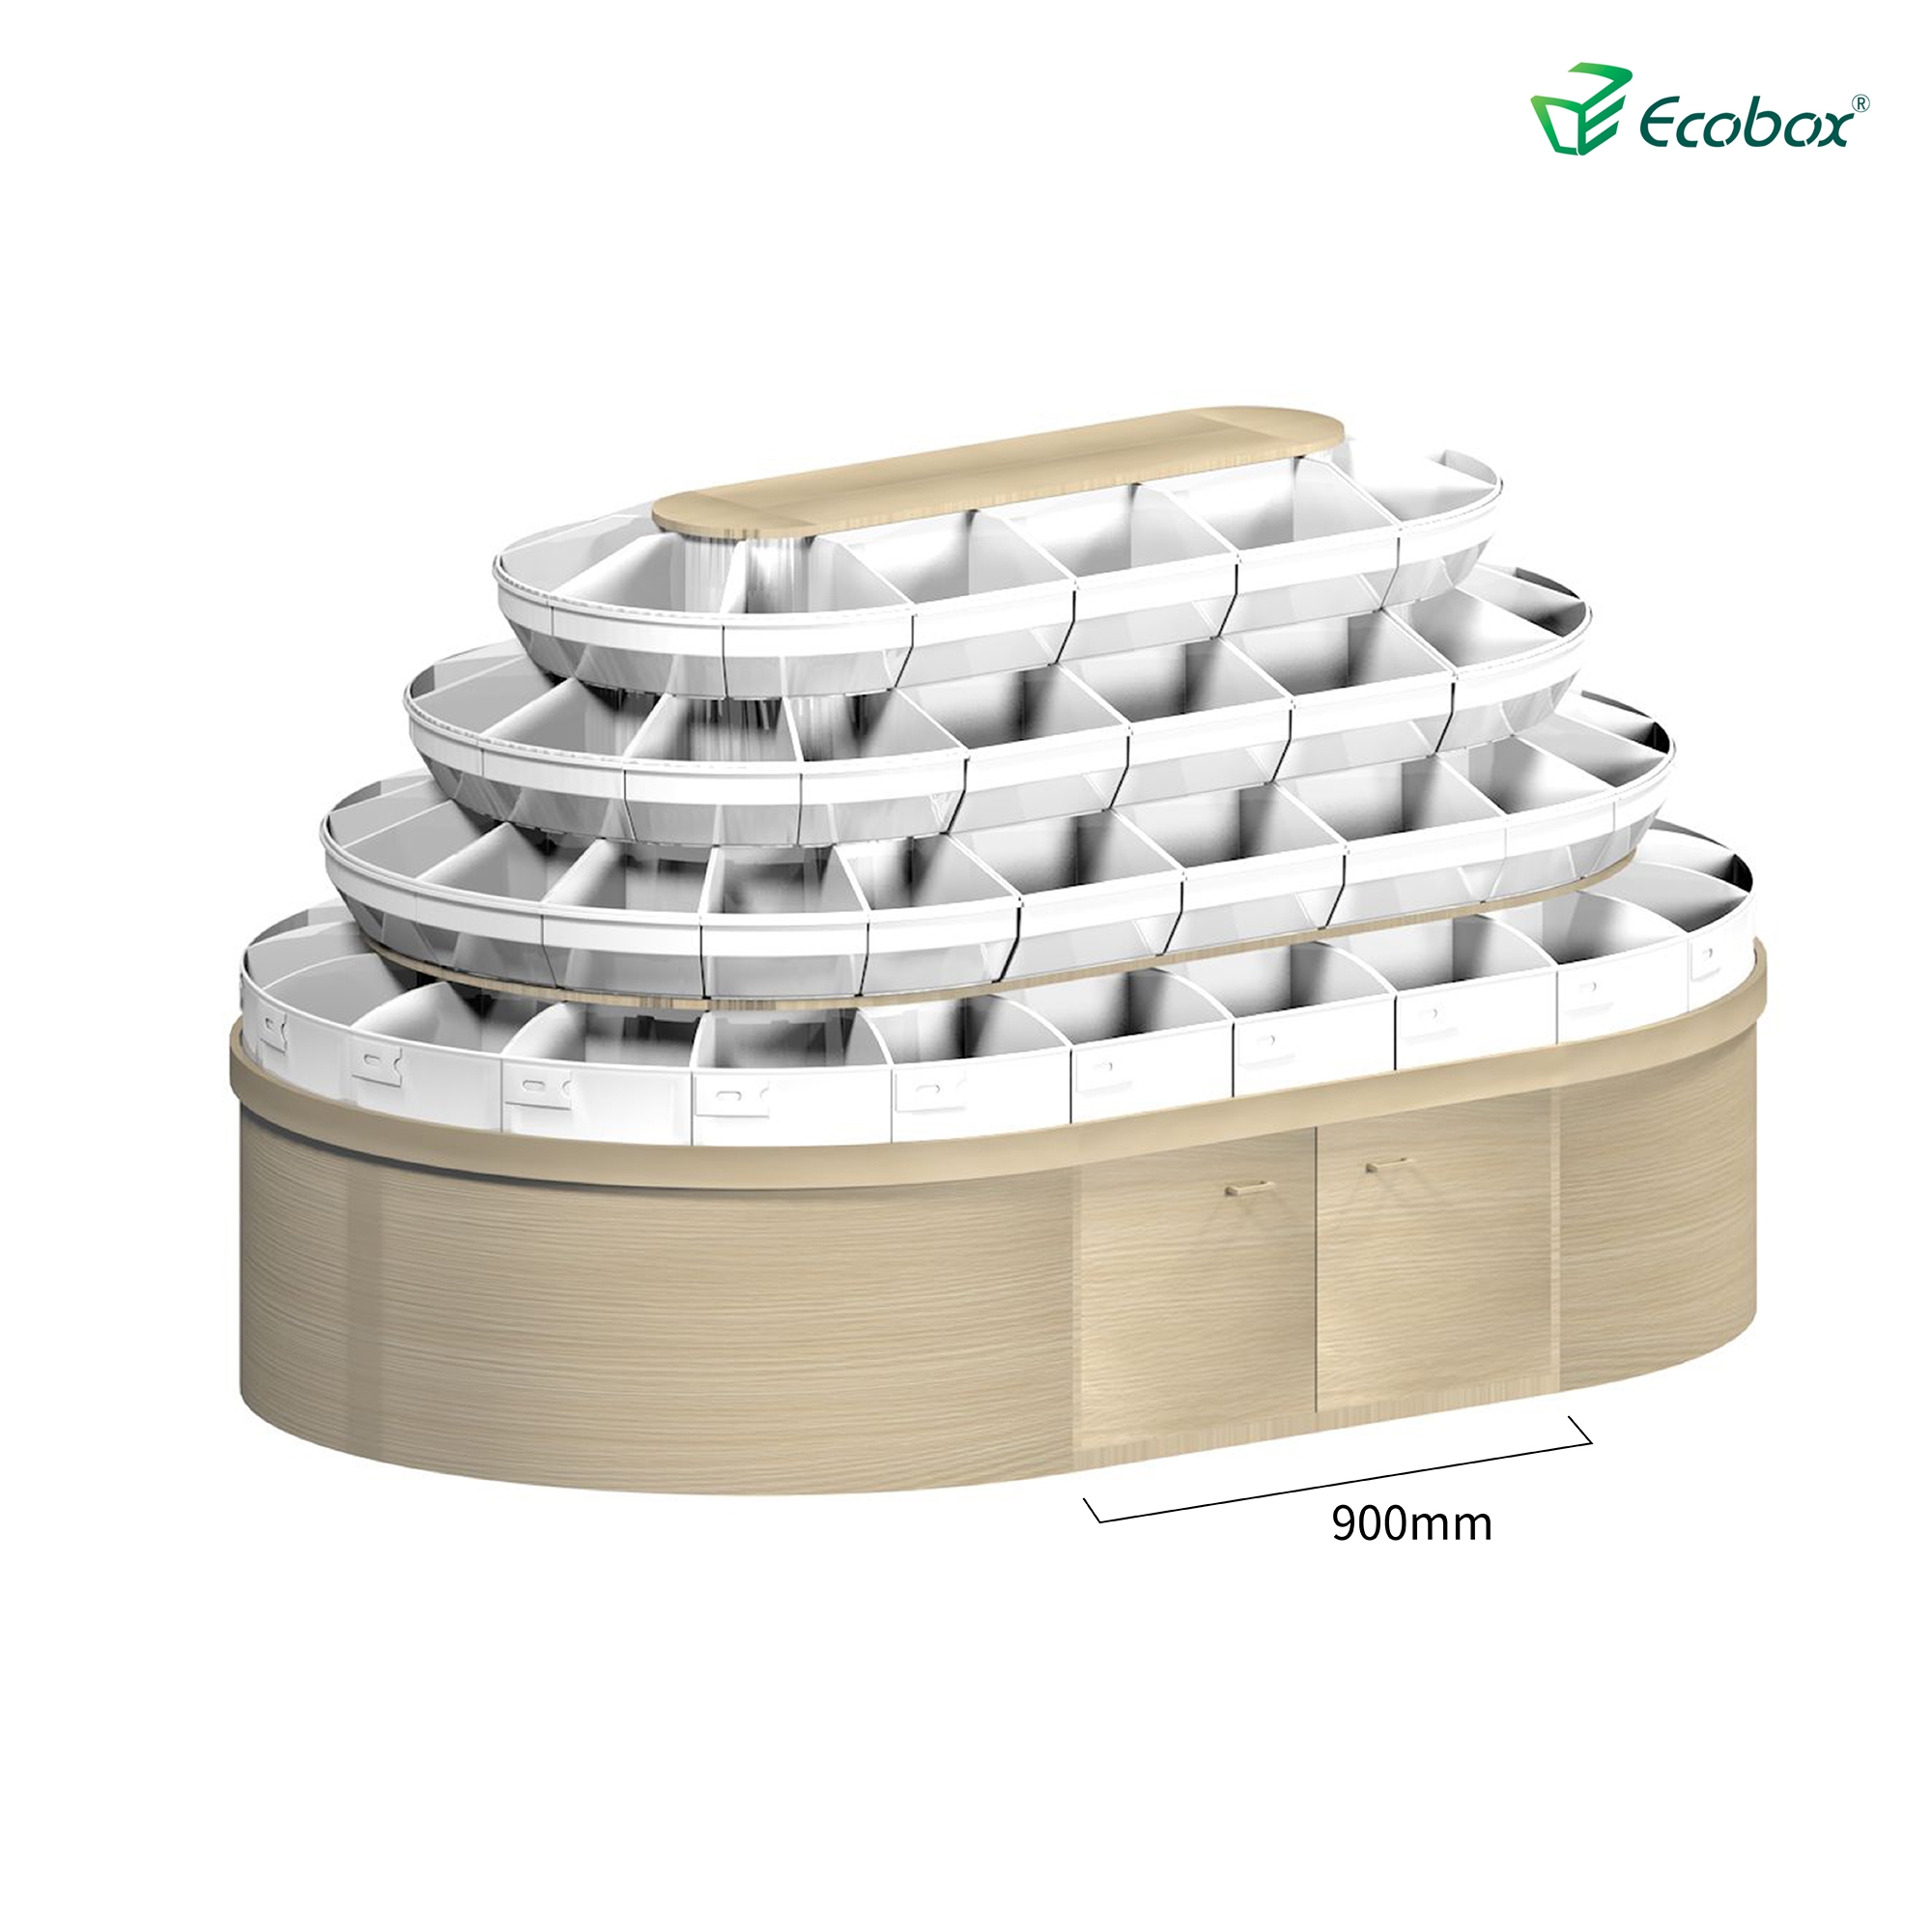 Ecobox G008 series round shelf with Ecobox bulk bins supermarket bulk food displays